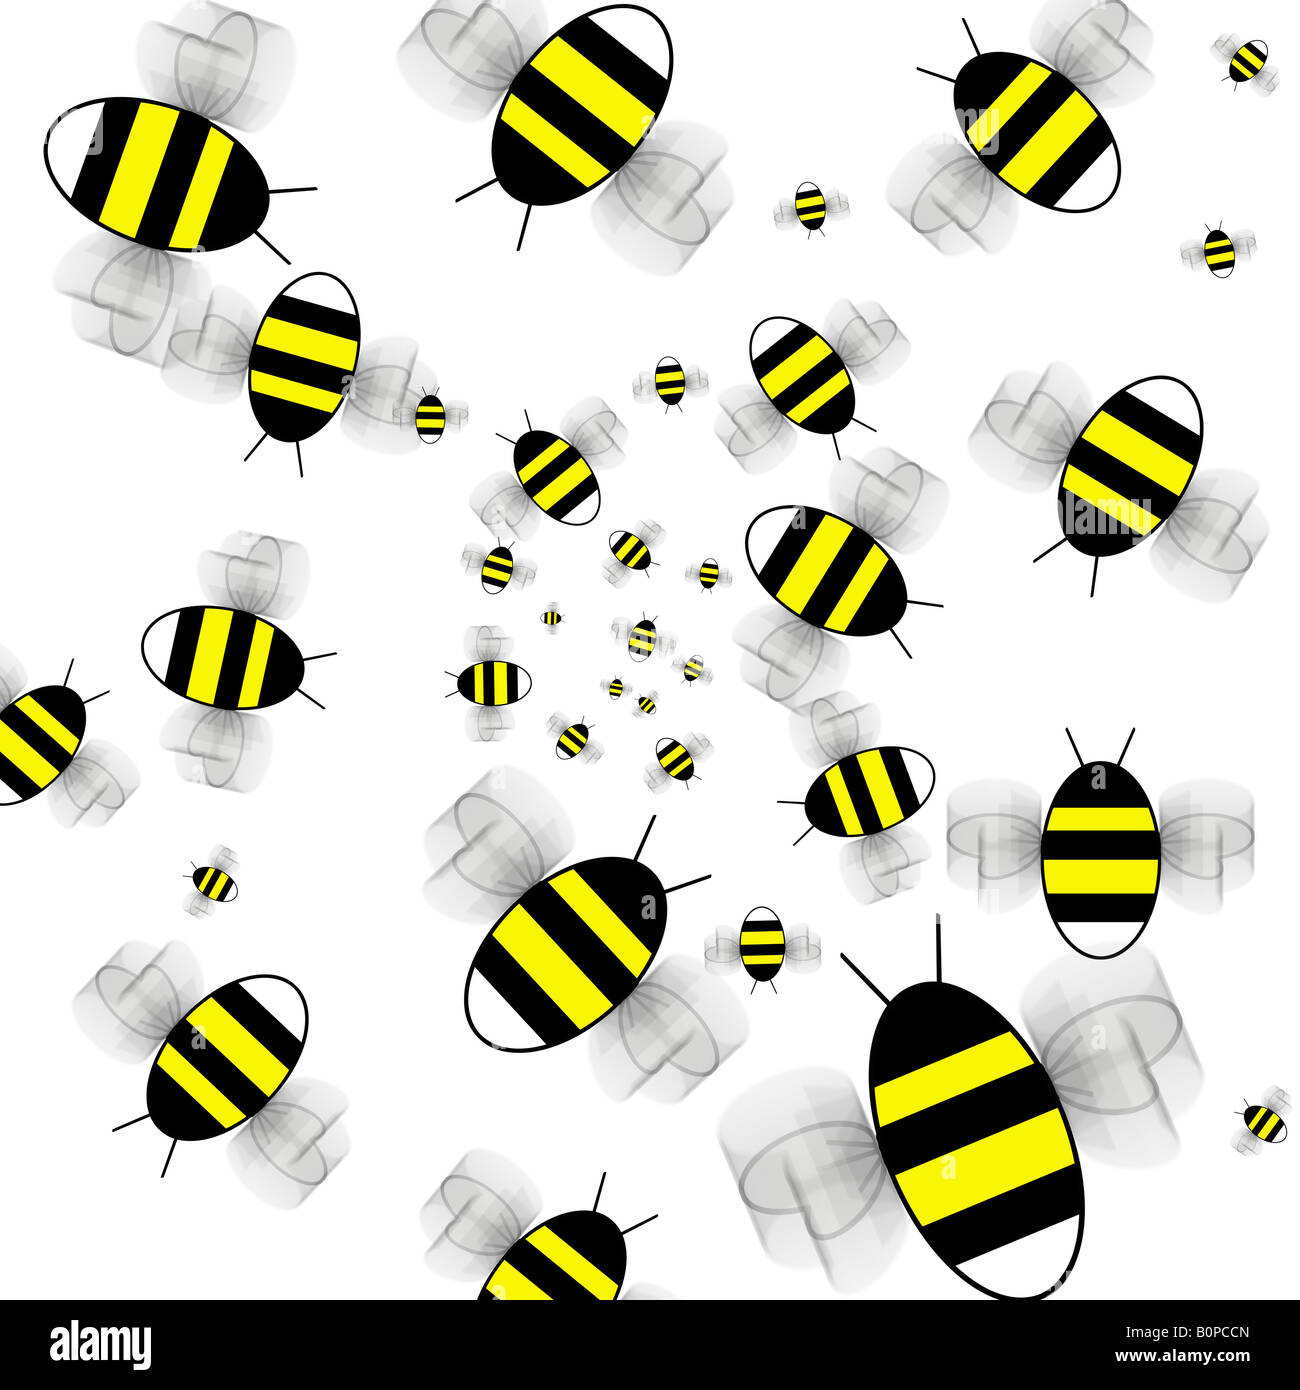 Bumble Bees illustration on white background Stock Photo